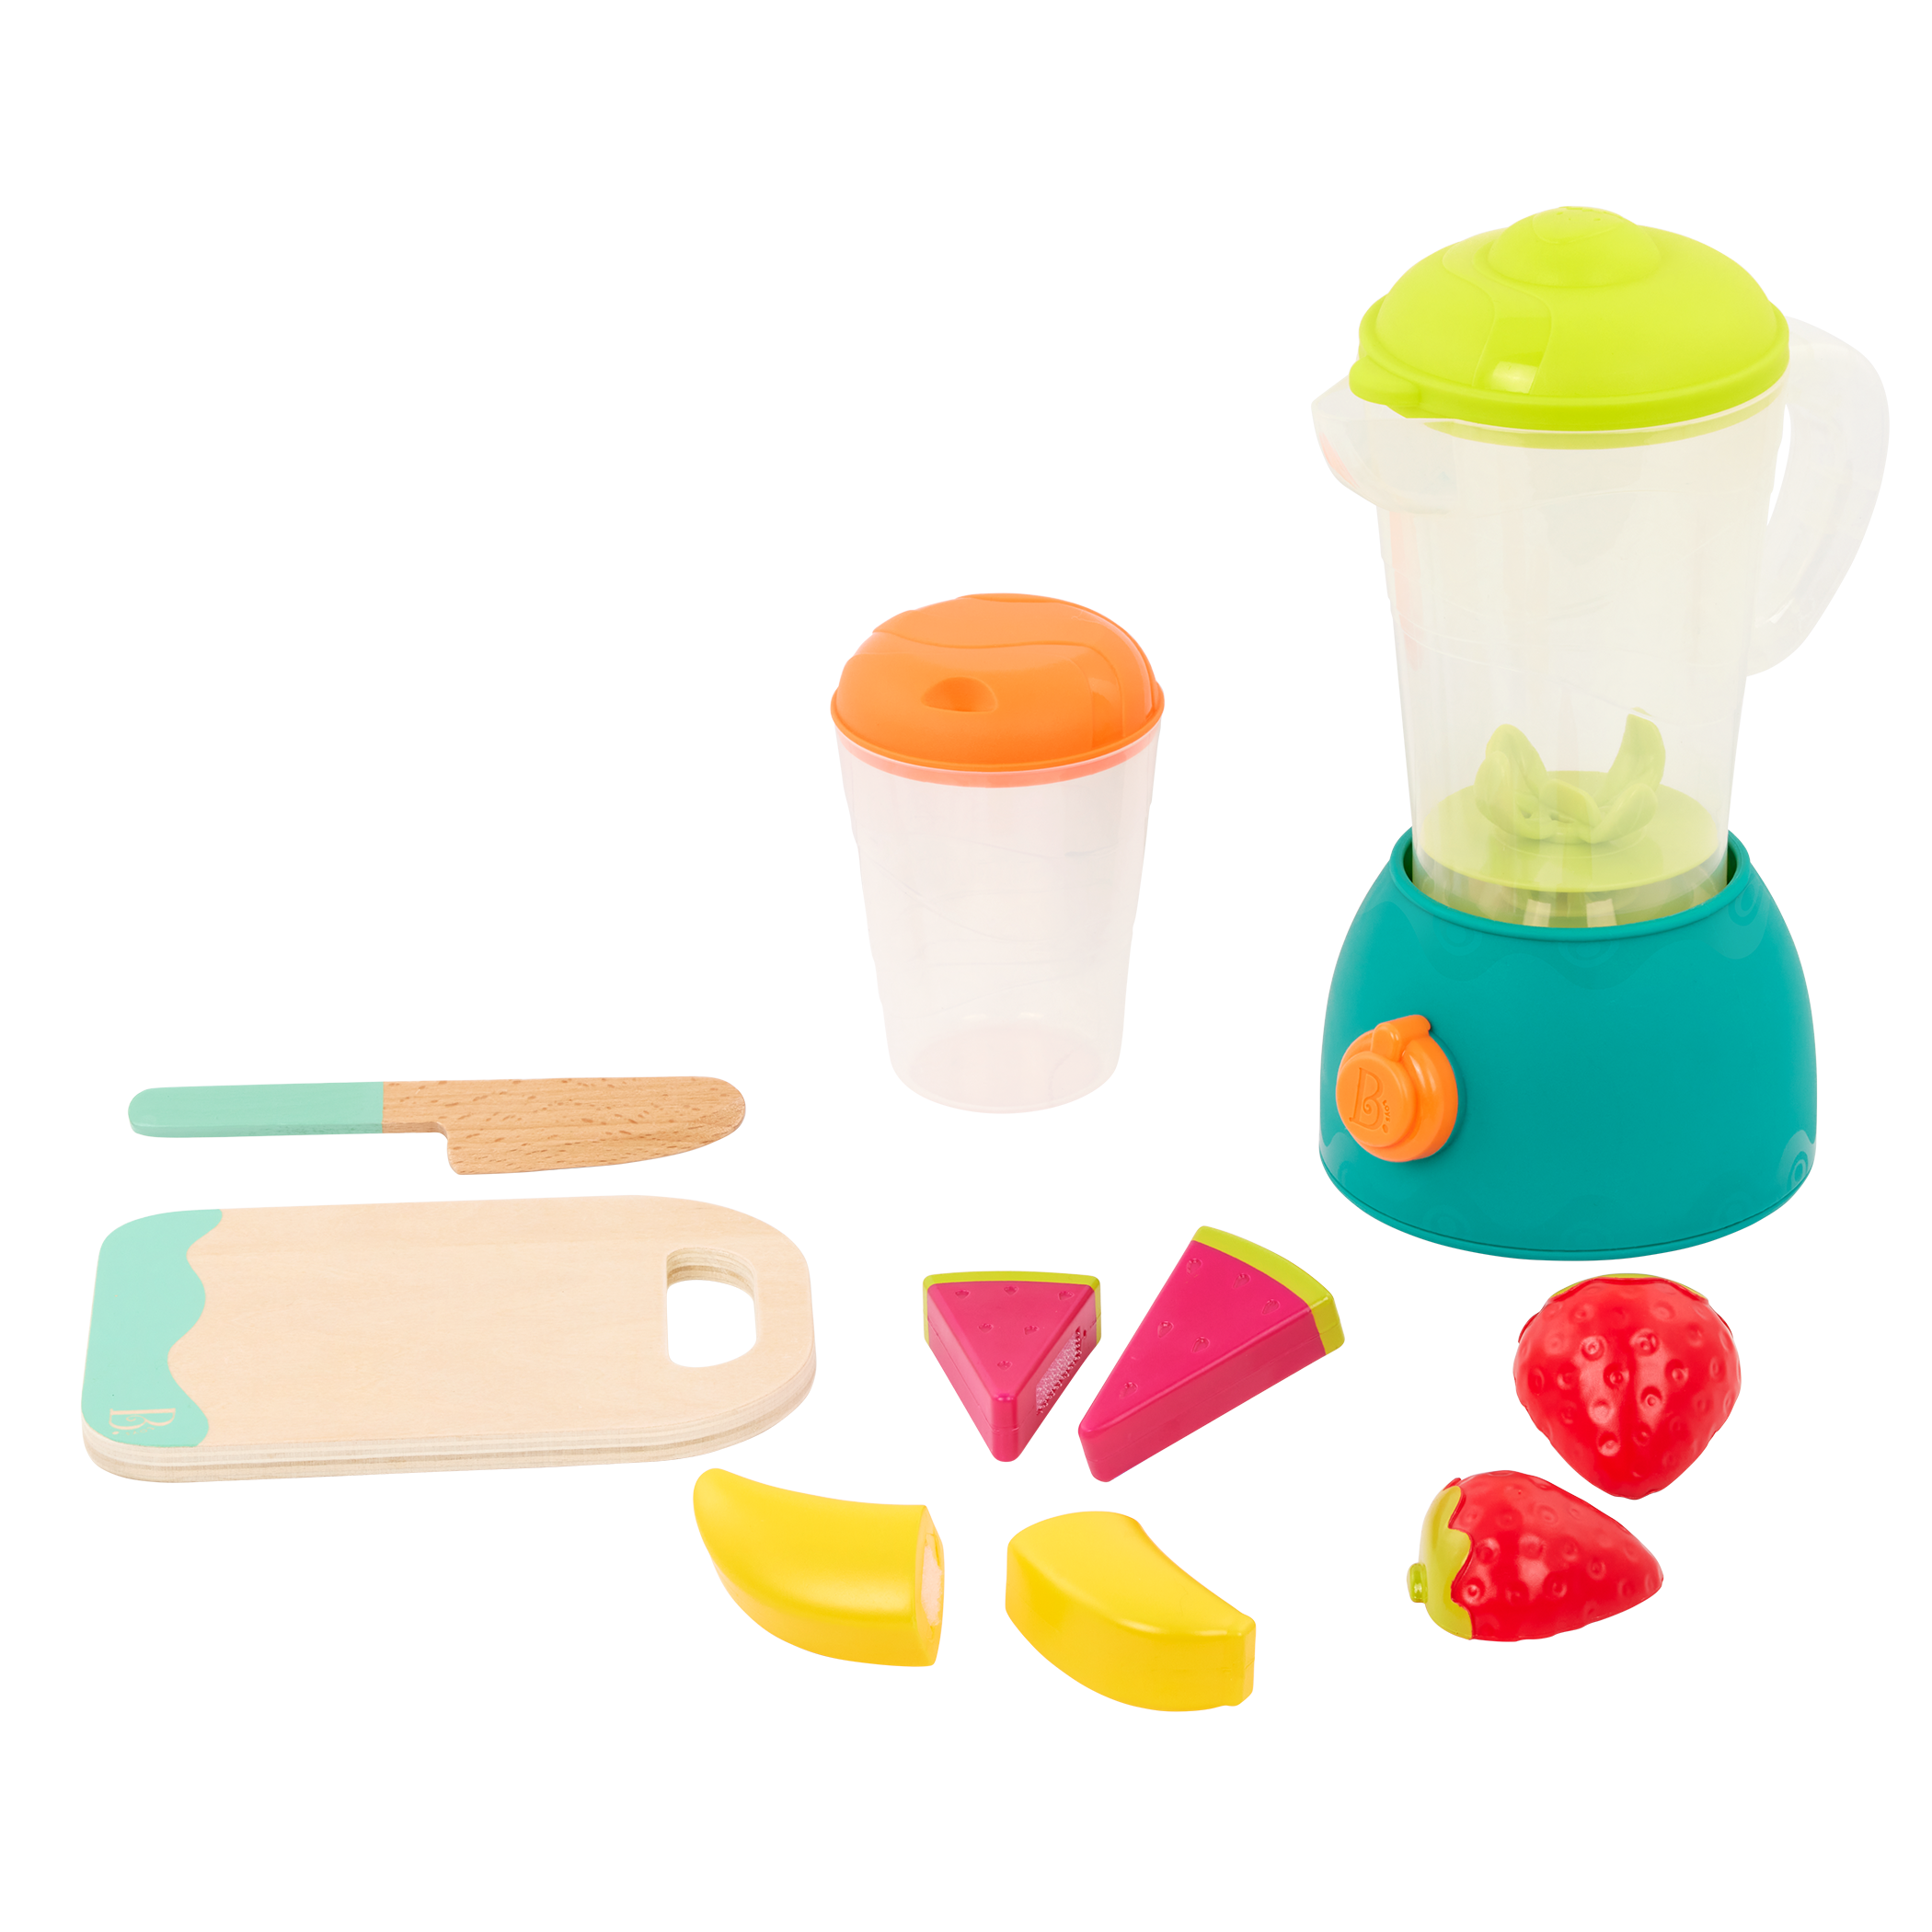 Mini Chef - Fruity Smoothie Playset, Blender Play Set